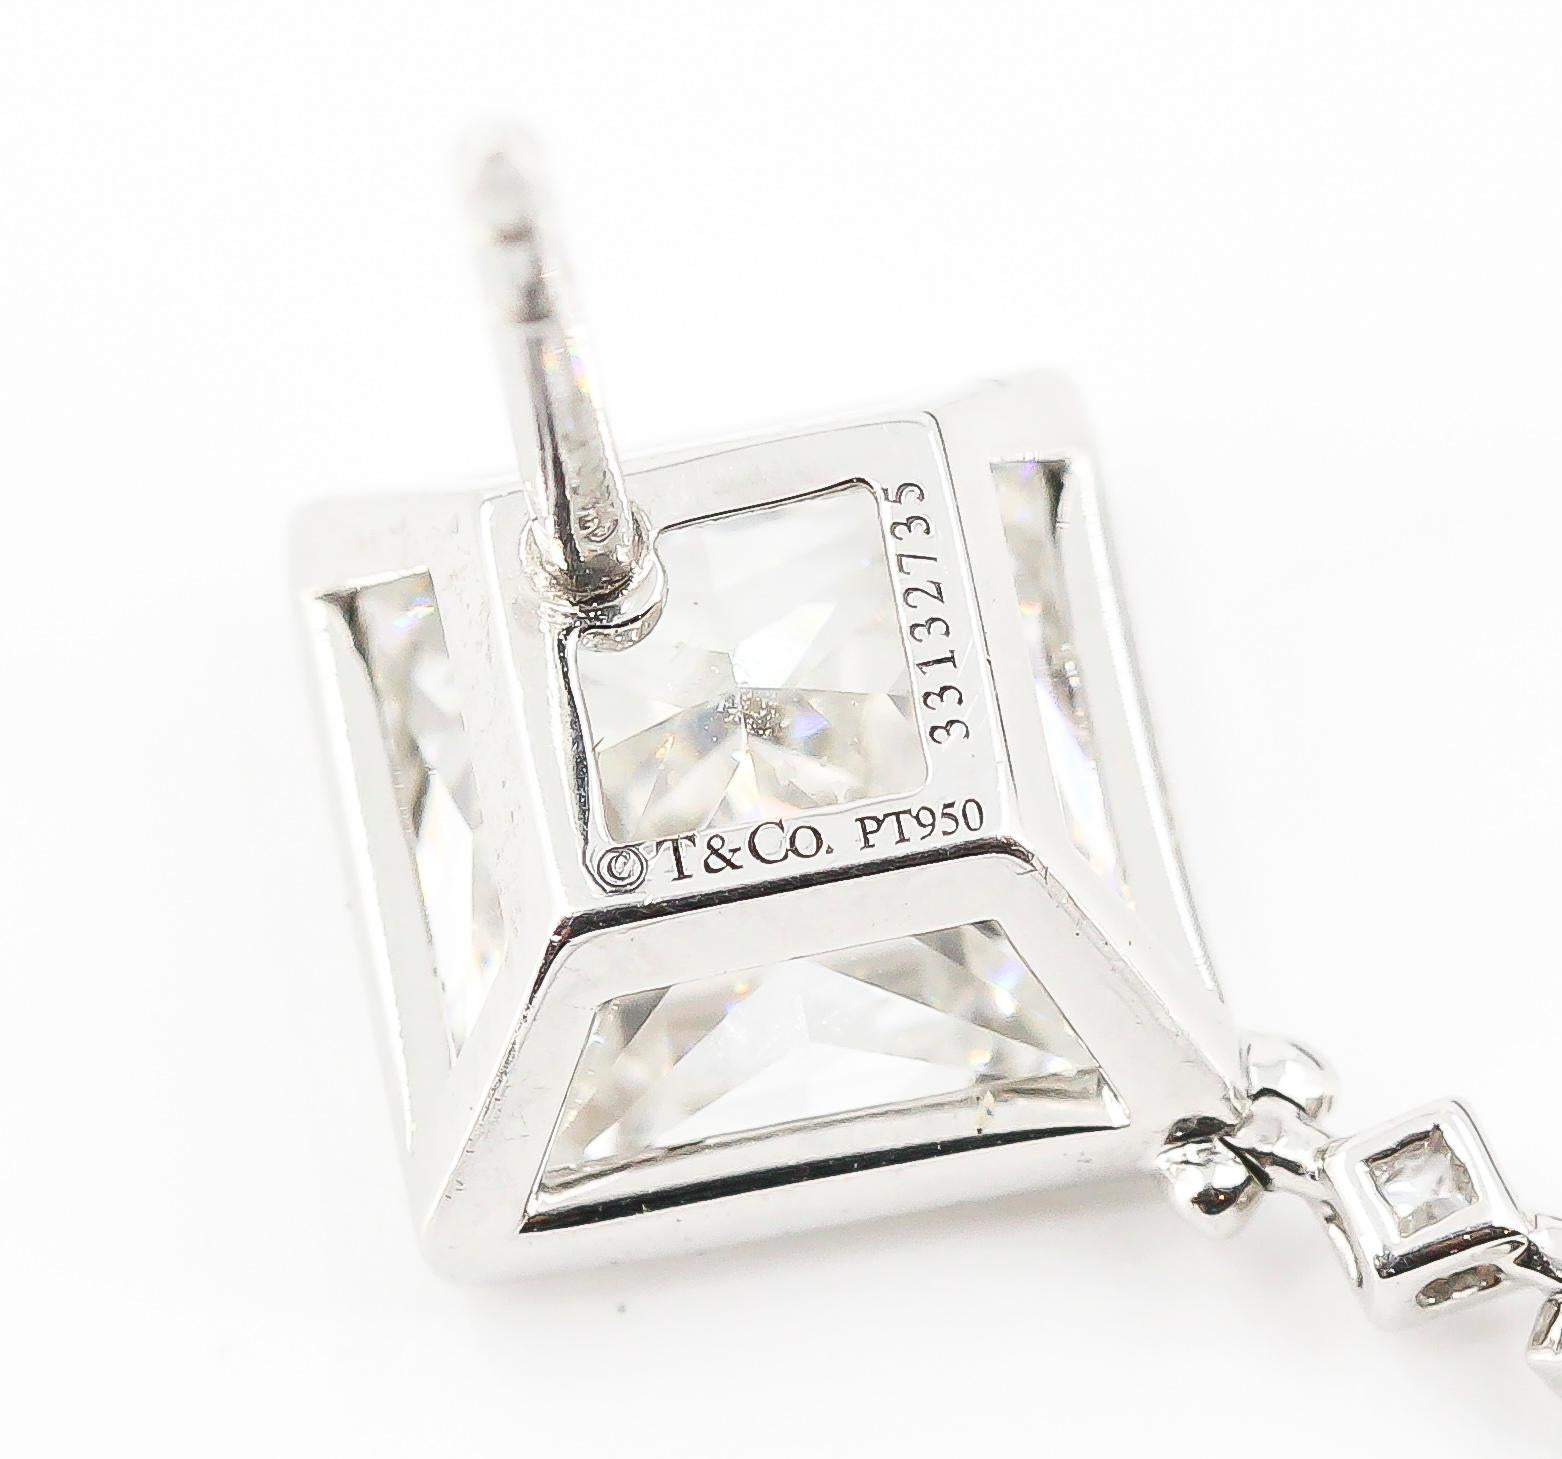 tiffany platinum diamond earrings